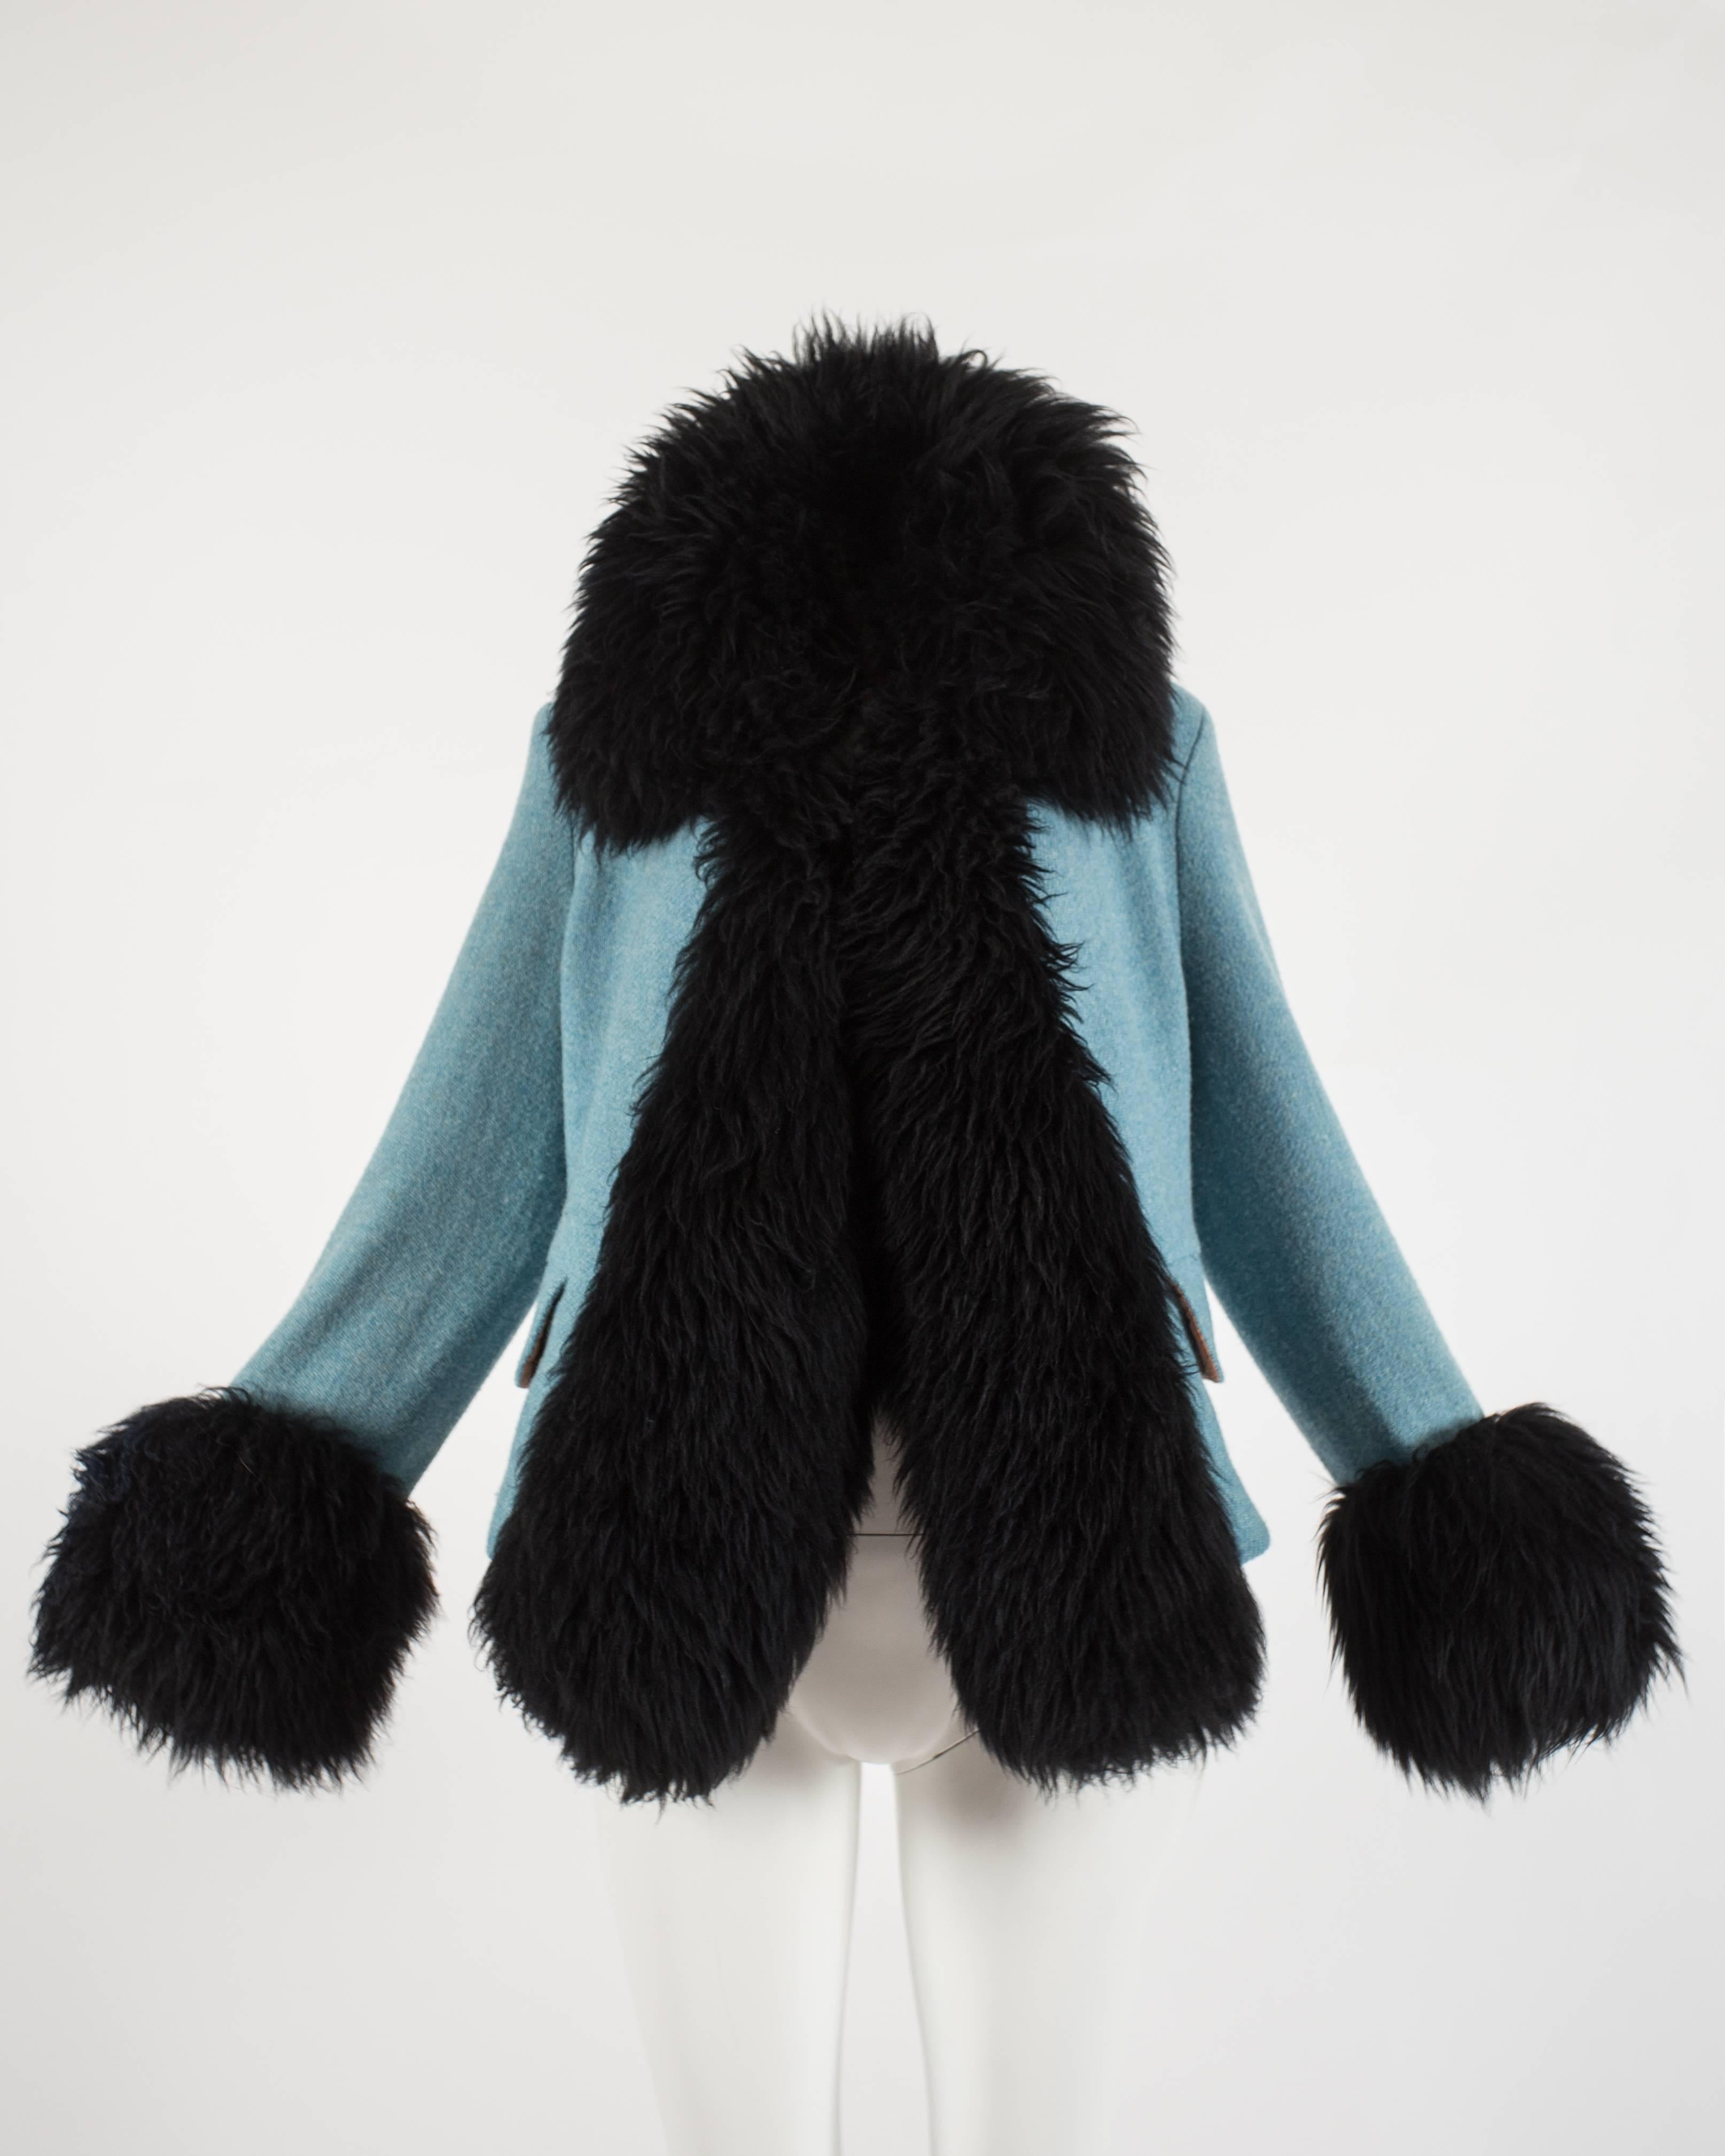 Vivienne Westwood Autumn-Winter 1991 blue Harris Tweed jacket with black sheepskin

- oversized sheepskin collar and cuffs
- 1 hook-and-eye closure 
